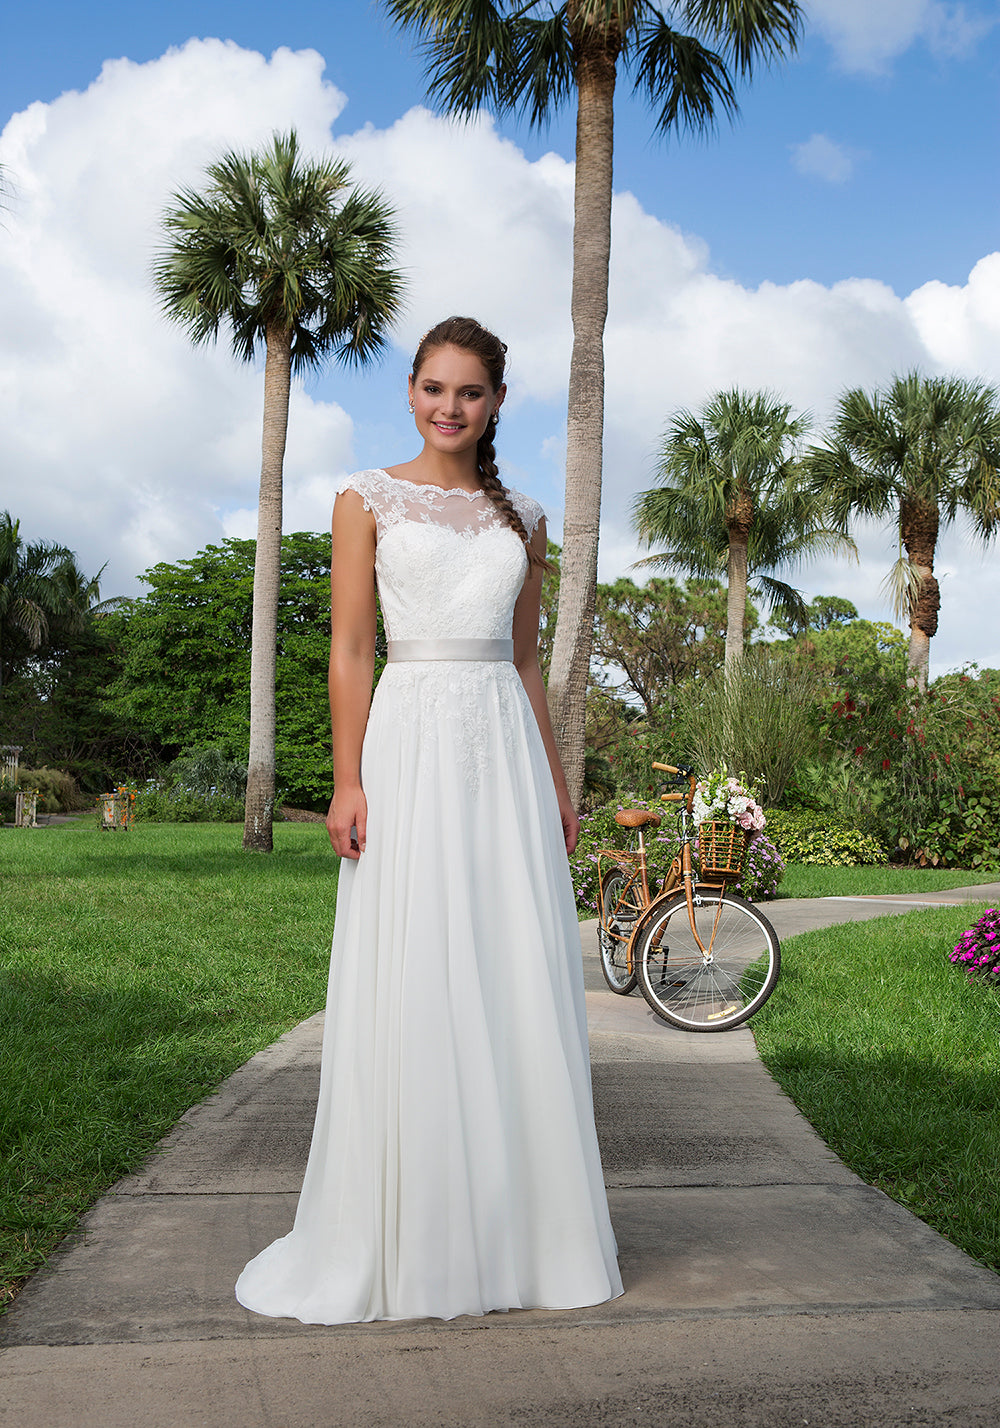 *NEW* Sweetheart Designer Wedding Gown - #6116